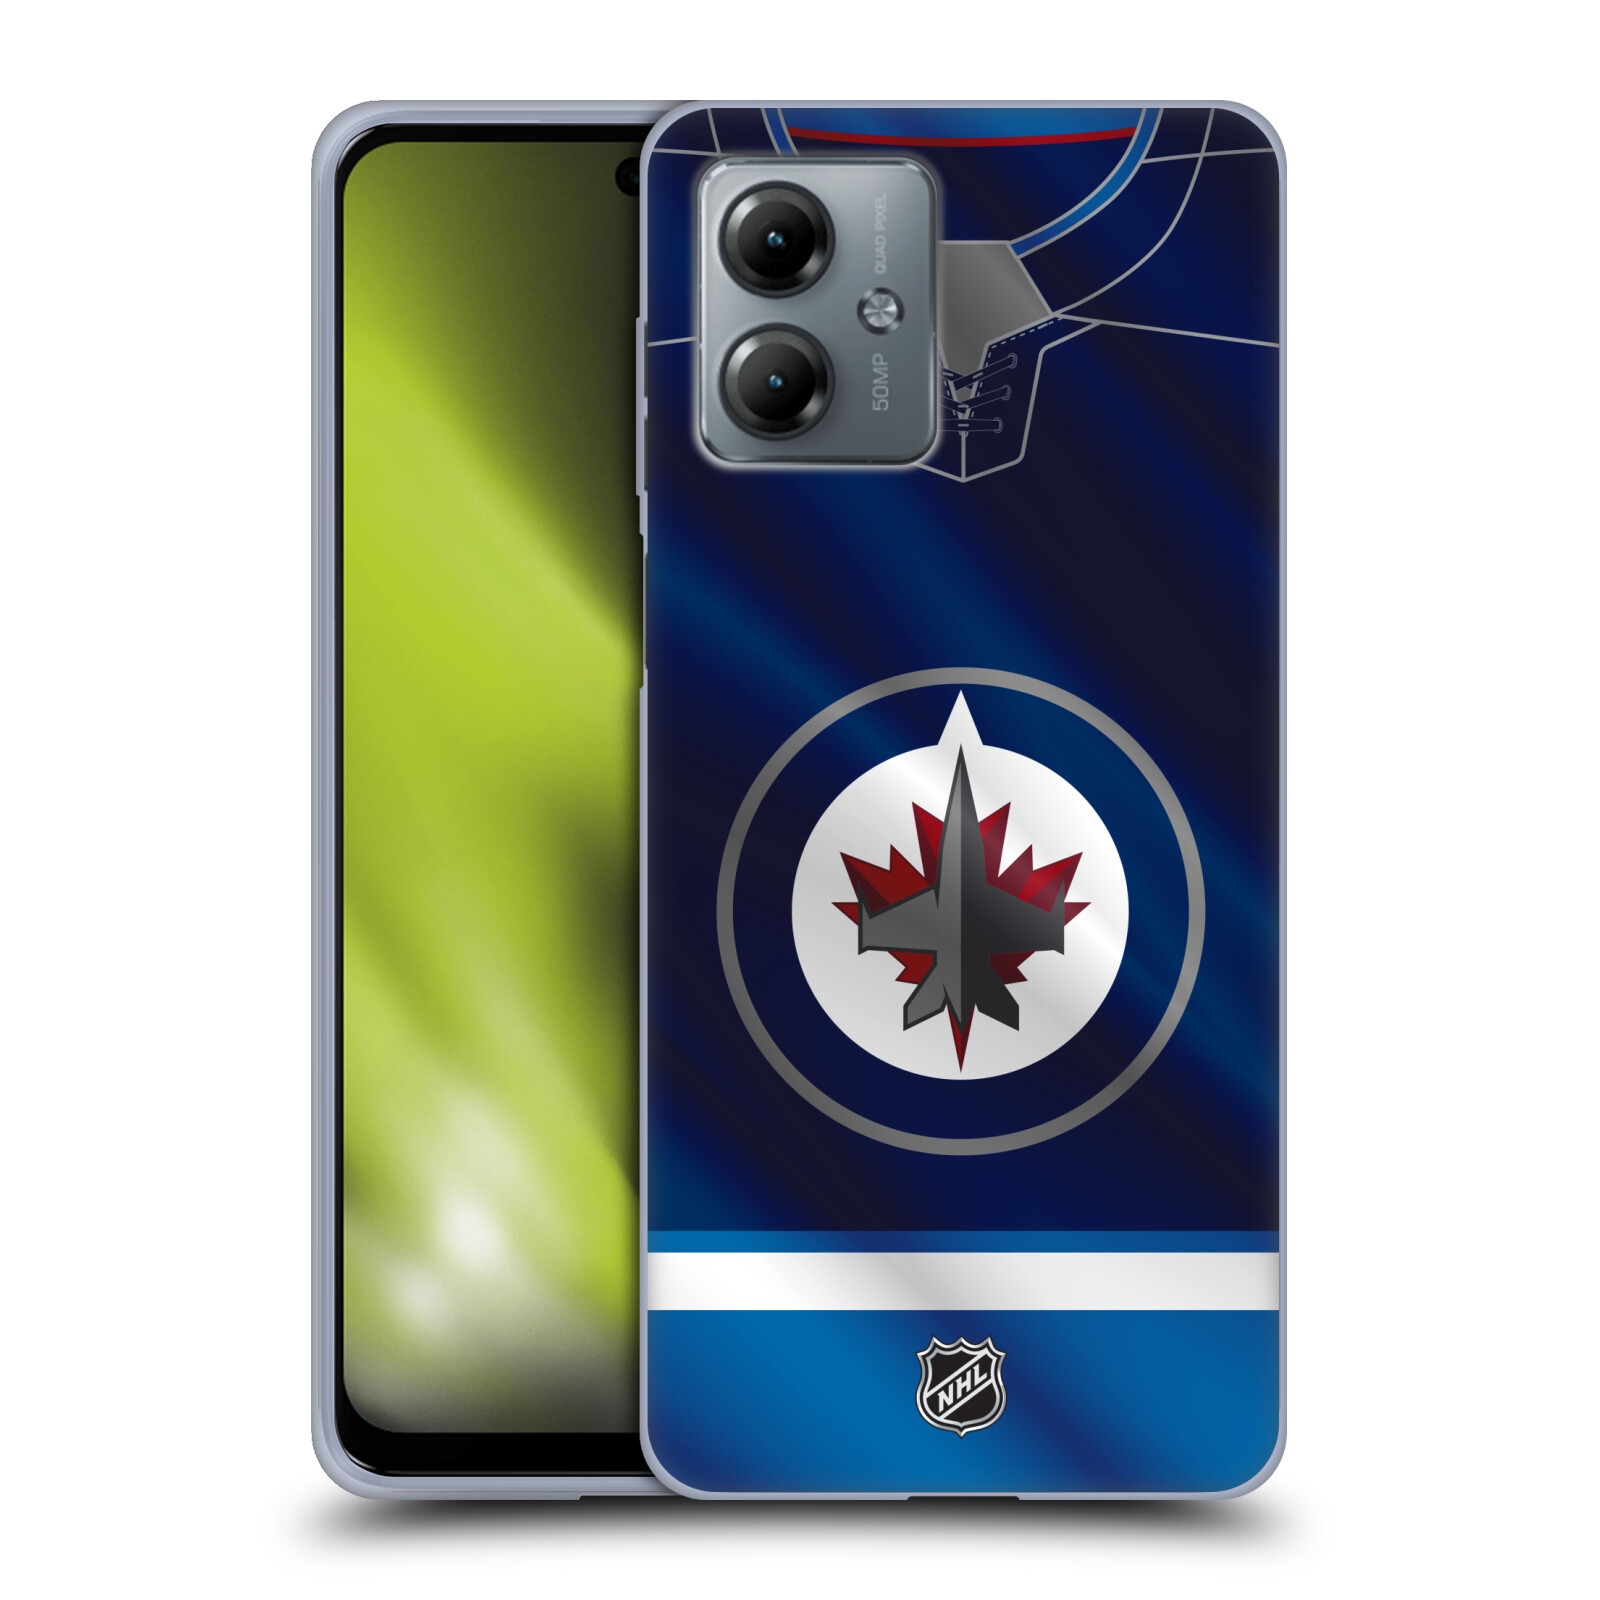 Silikonové pouzdro na mobil Motorola Moto G14 - NHL - Dres Winnipeg Jets (Silikonový kryt, obal, pouzdro na mobilní telefon Motorola Moto G14 s licencovaným motivem NHL - Dres Winnipeg Jets)